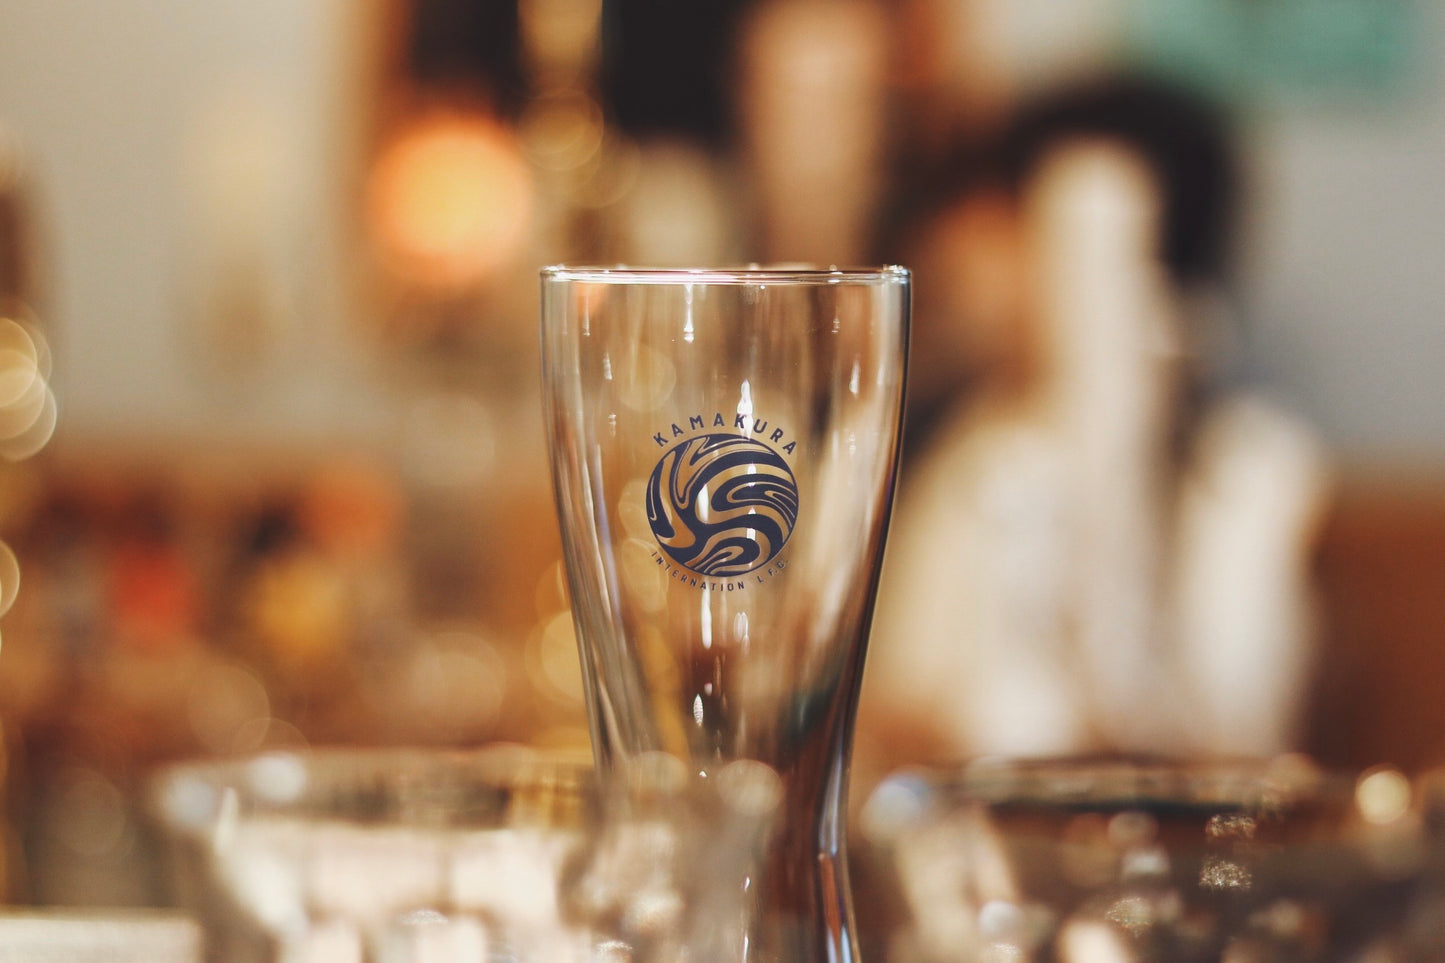 Kamakura Inter Beer Glass